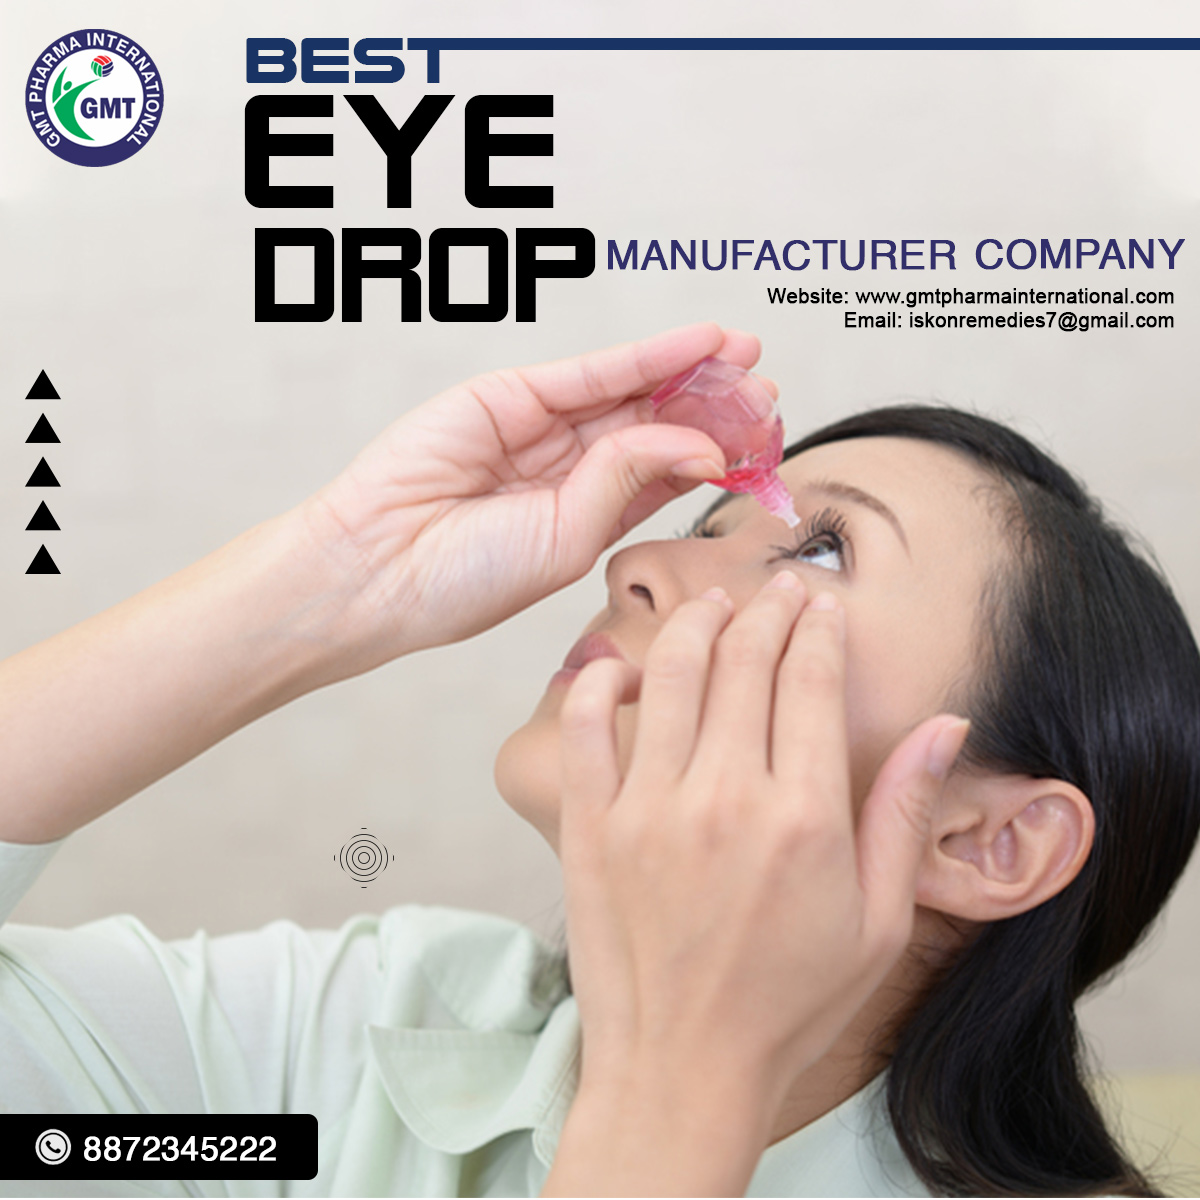 Eye Drops Manufacturer